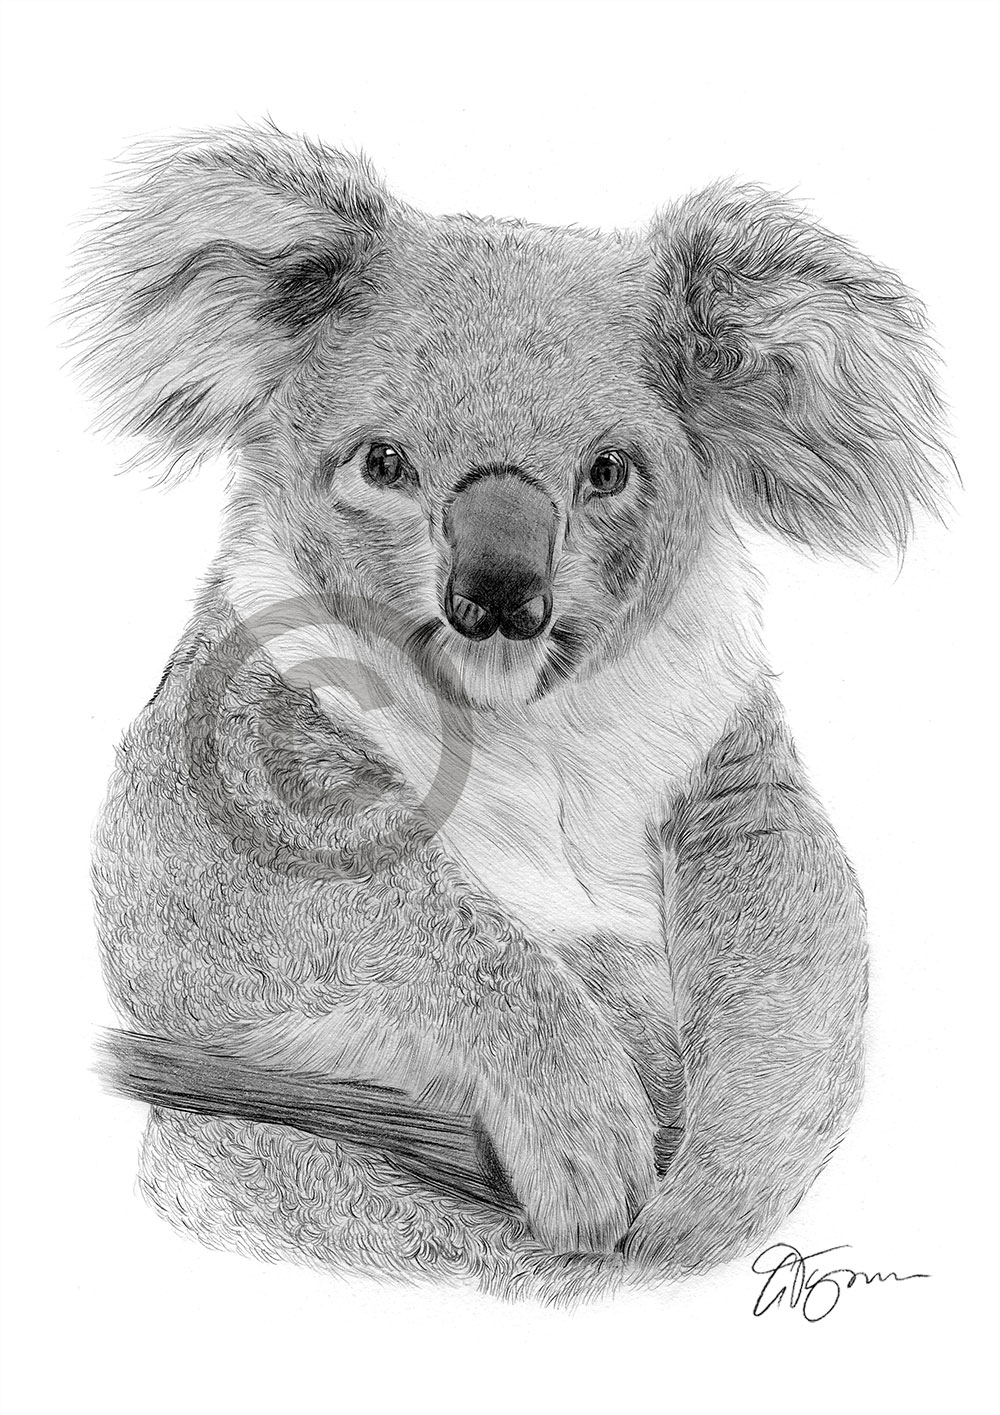 Pencil drawing of a koala bear by artist Gary Tymon